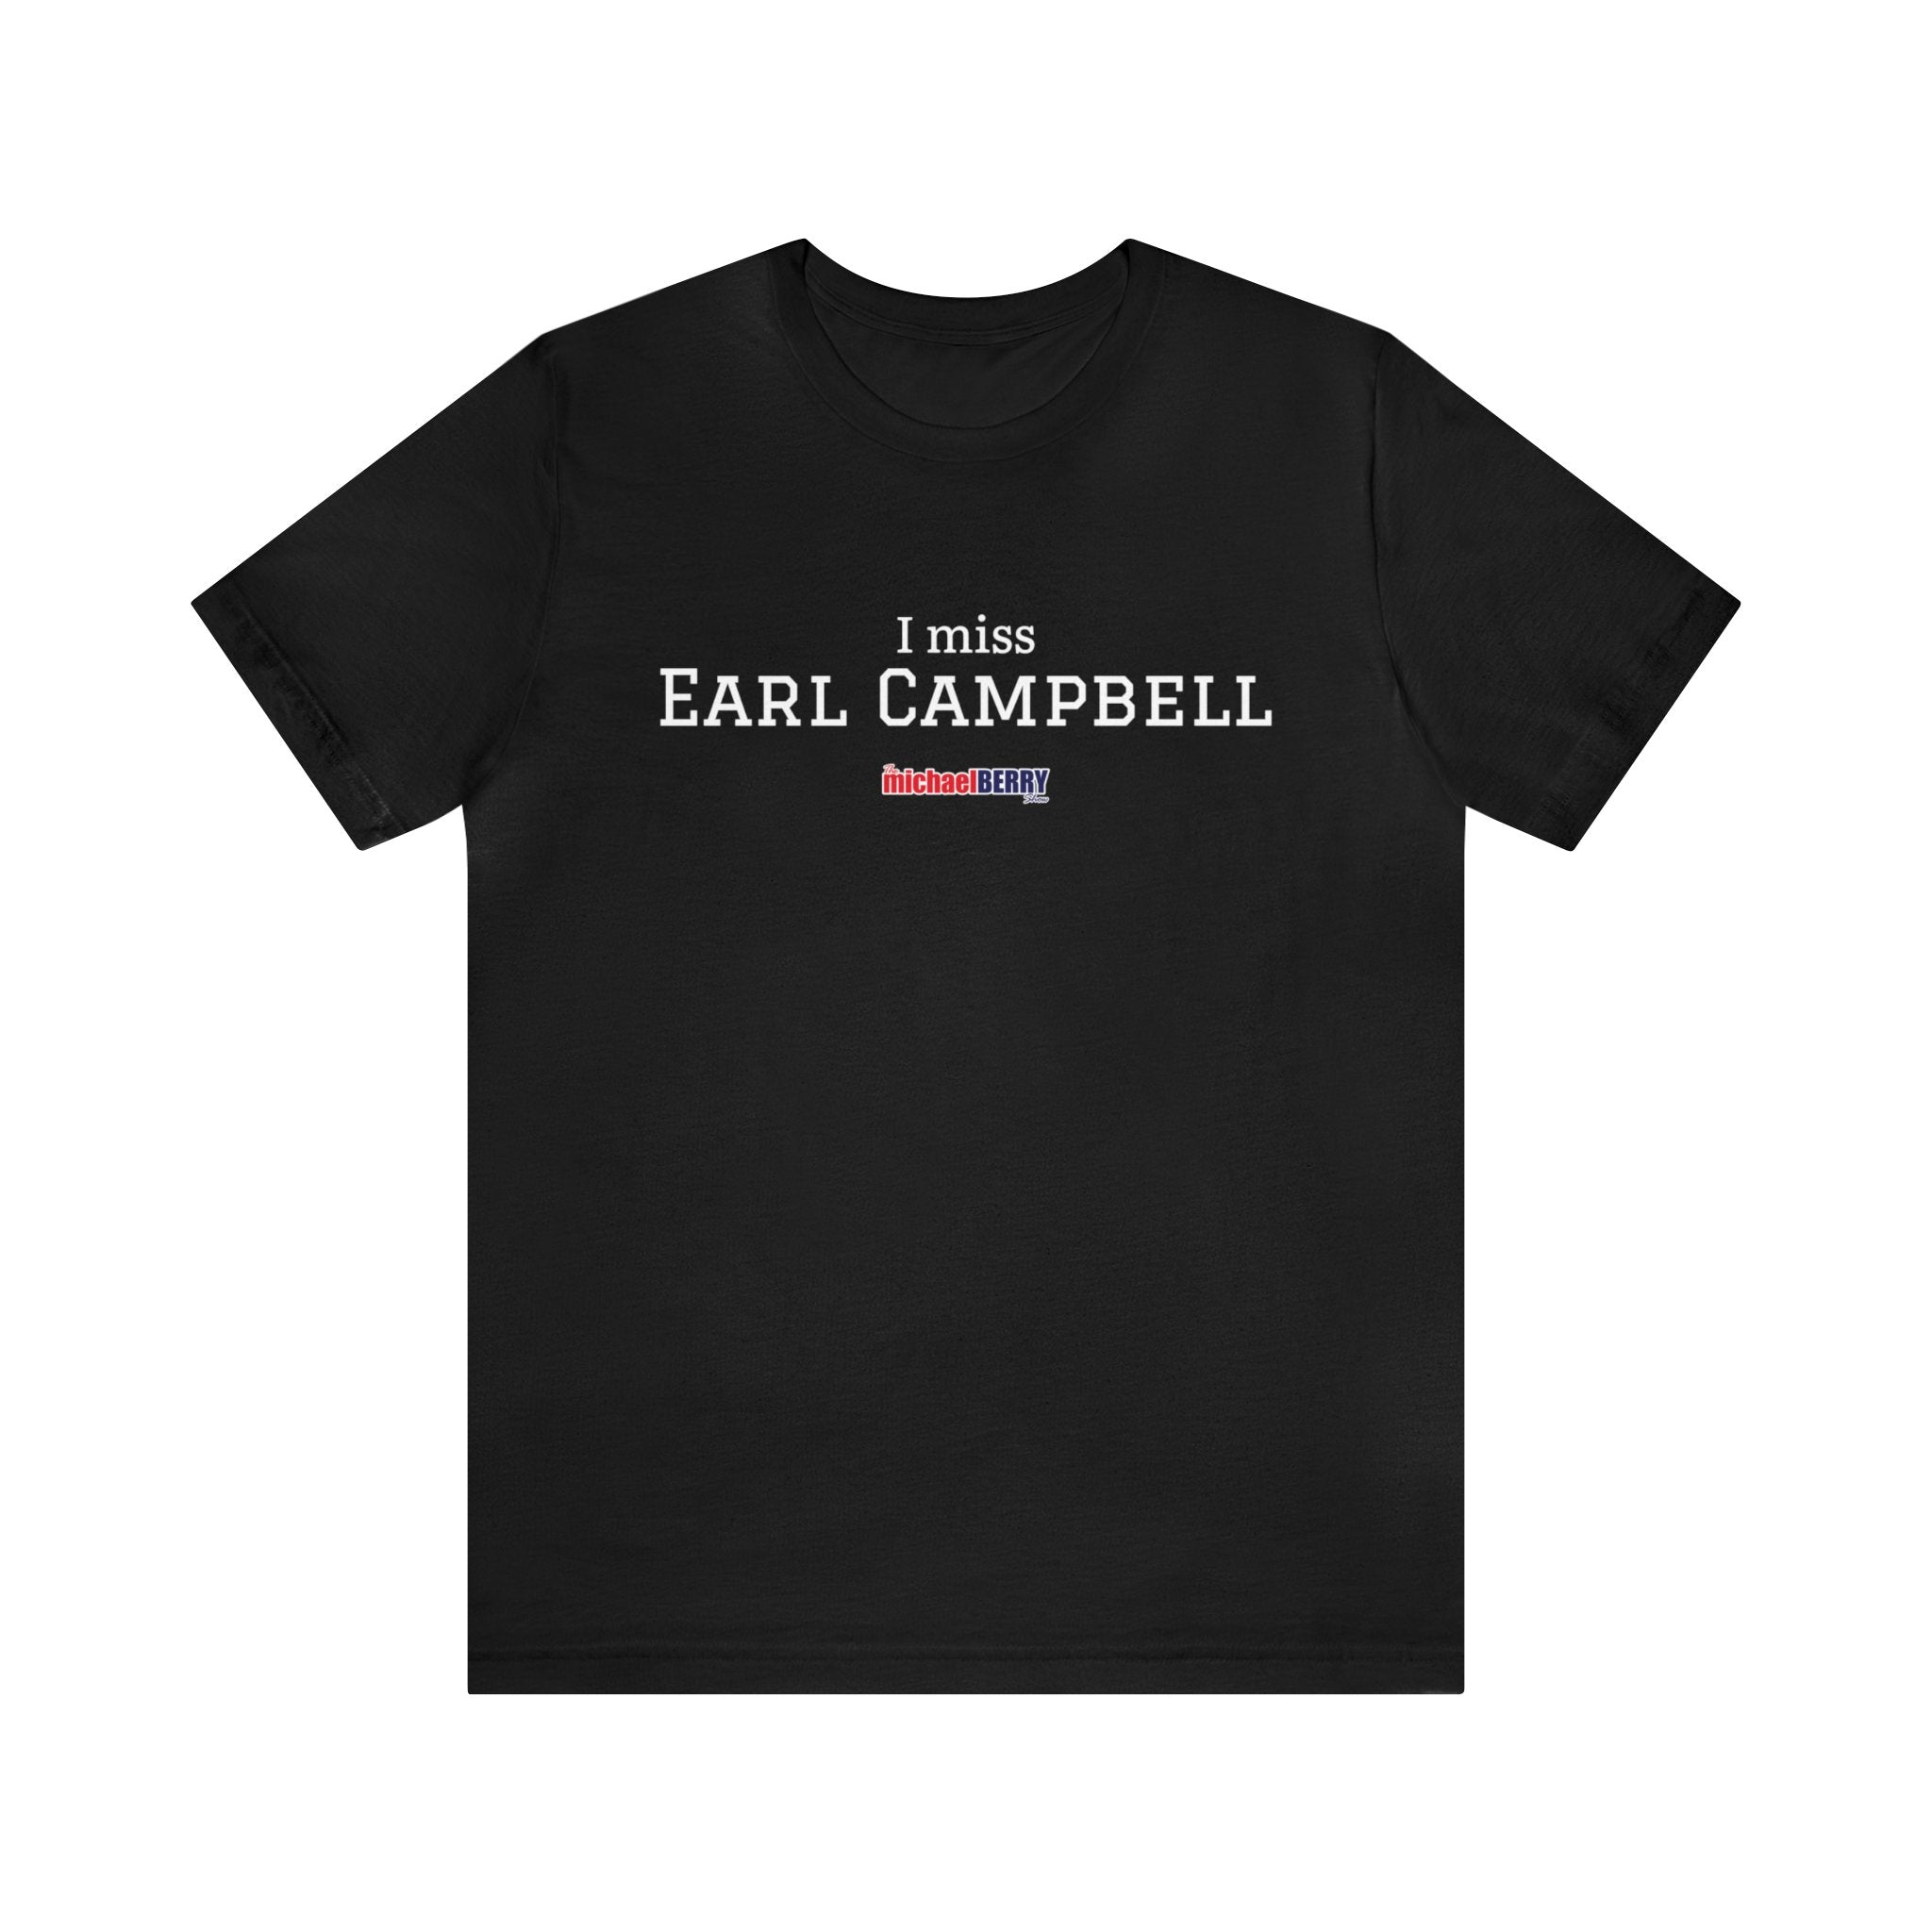 I miss EARL CAMPBELL - Unisex Jersey Short Sleeve Tee